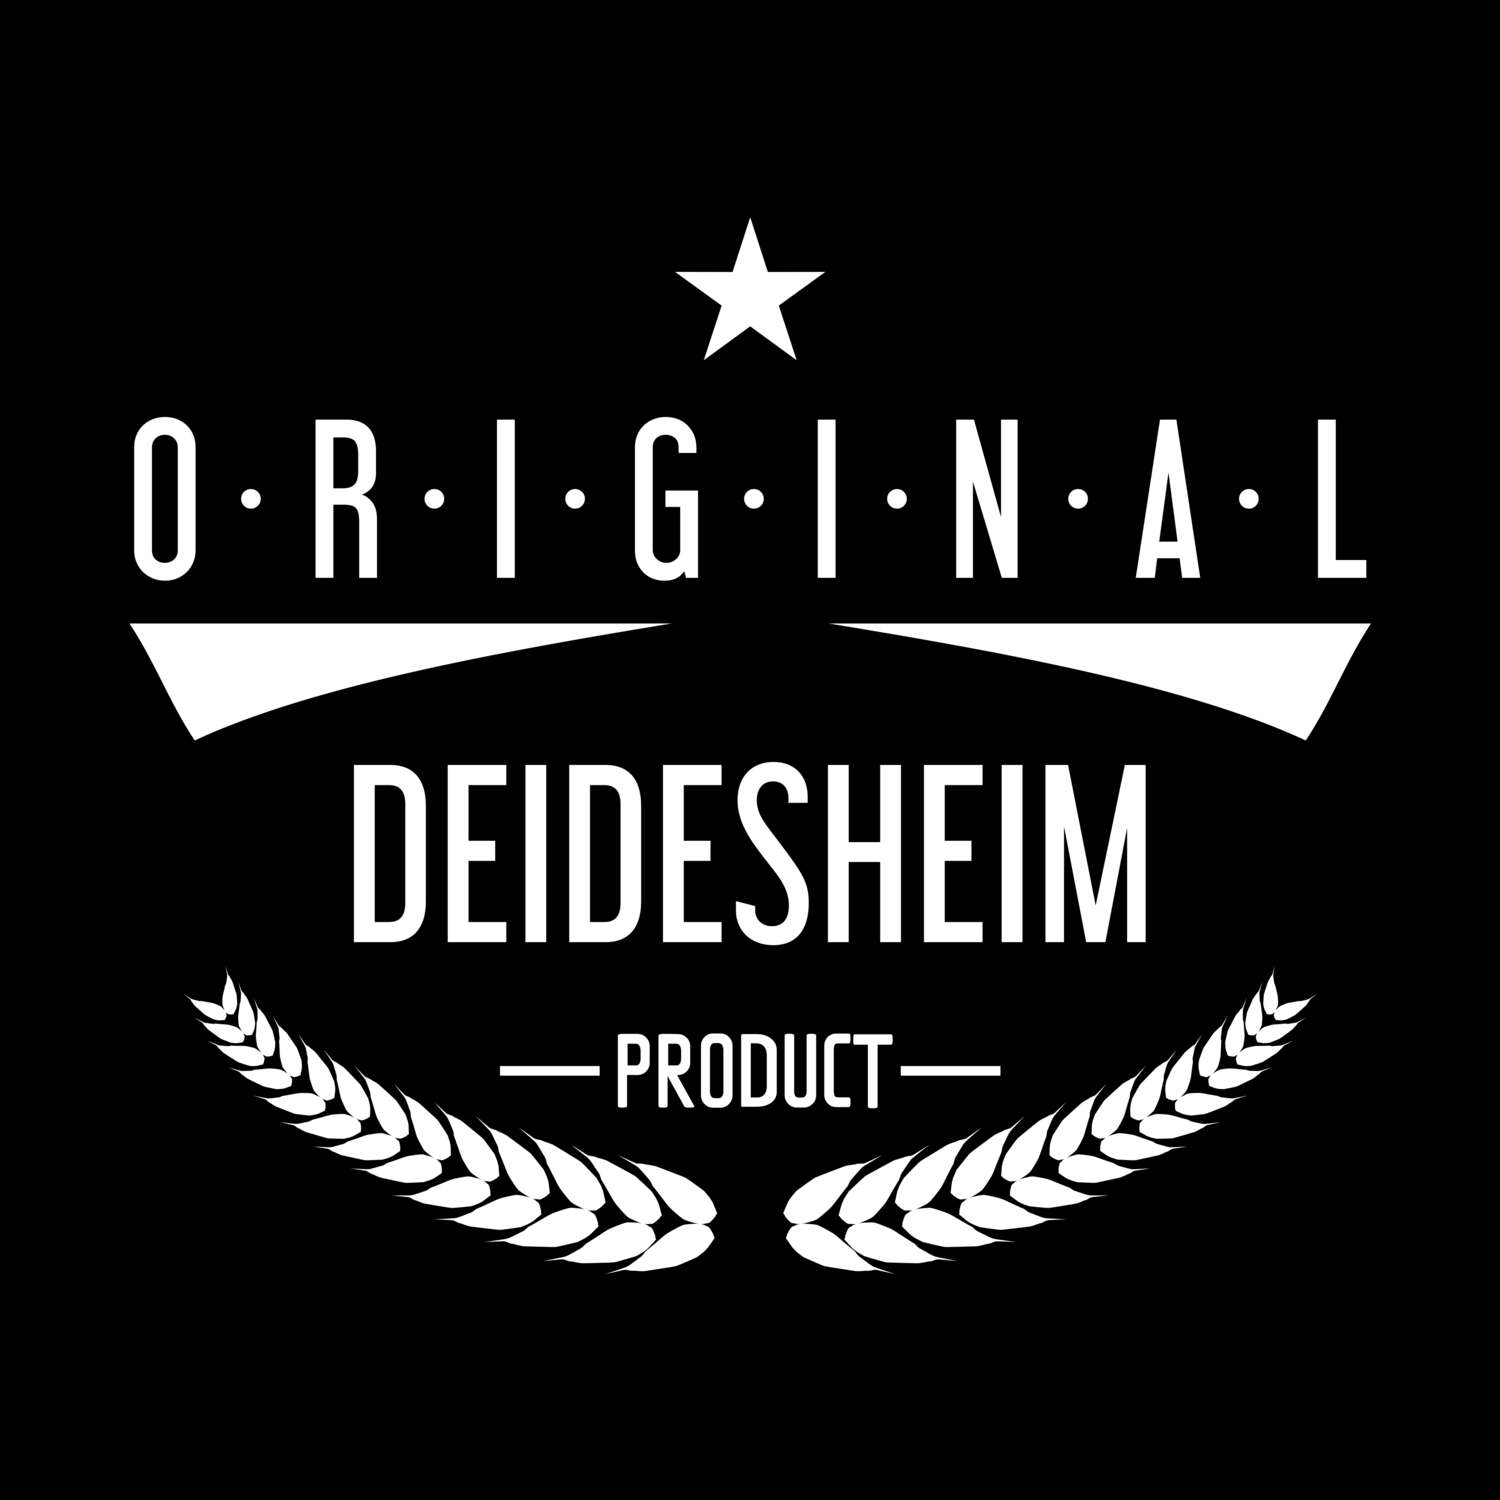 Deidesheim T-Shirt »Original Product«